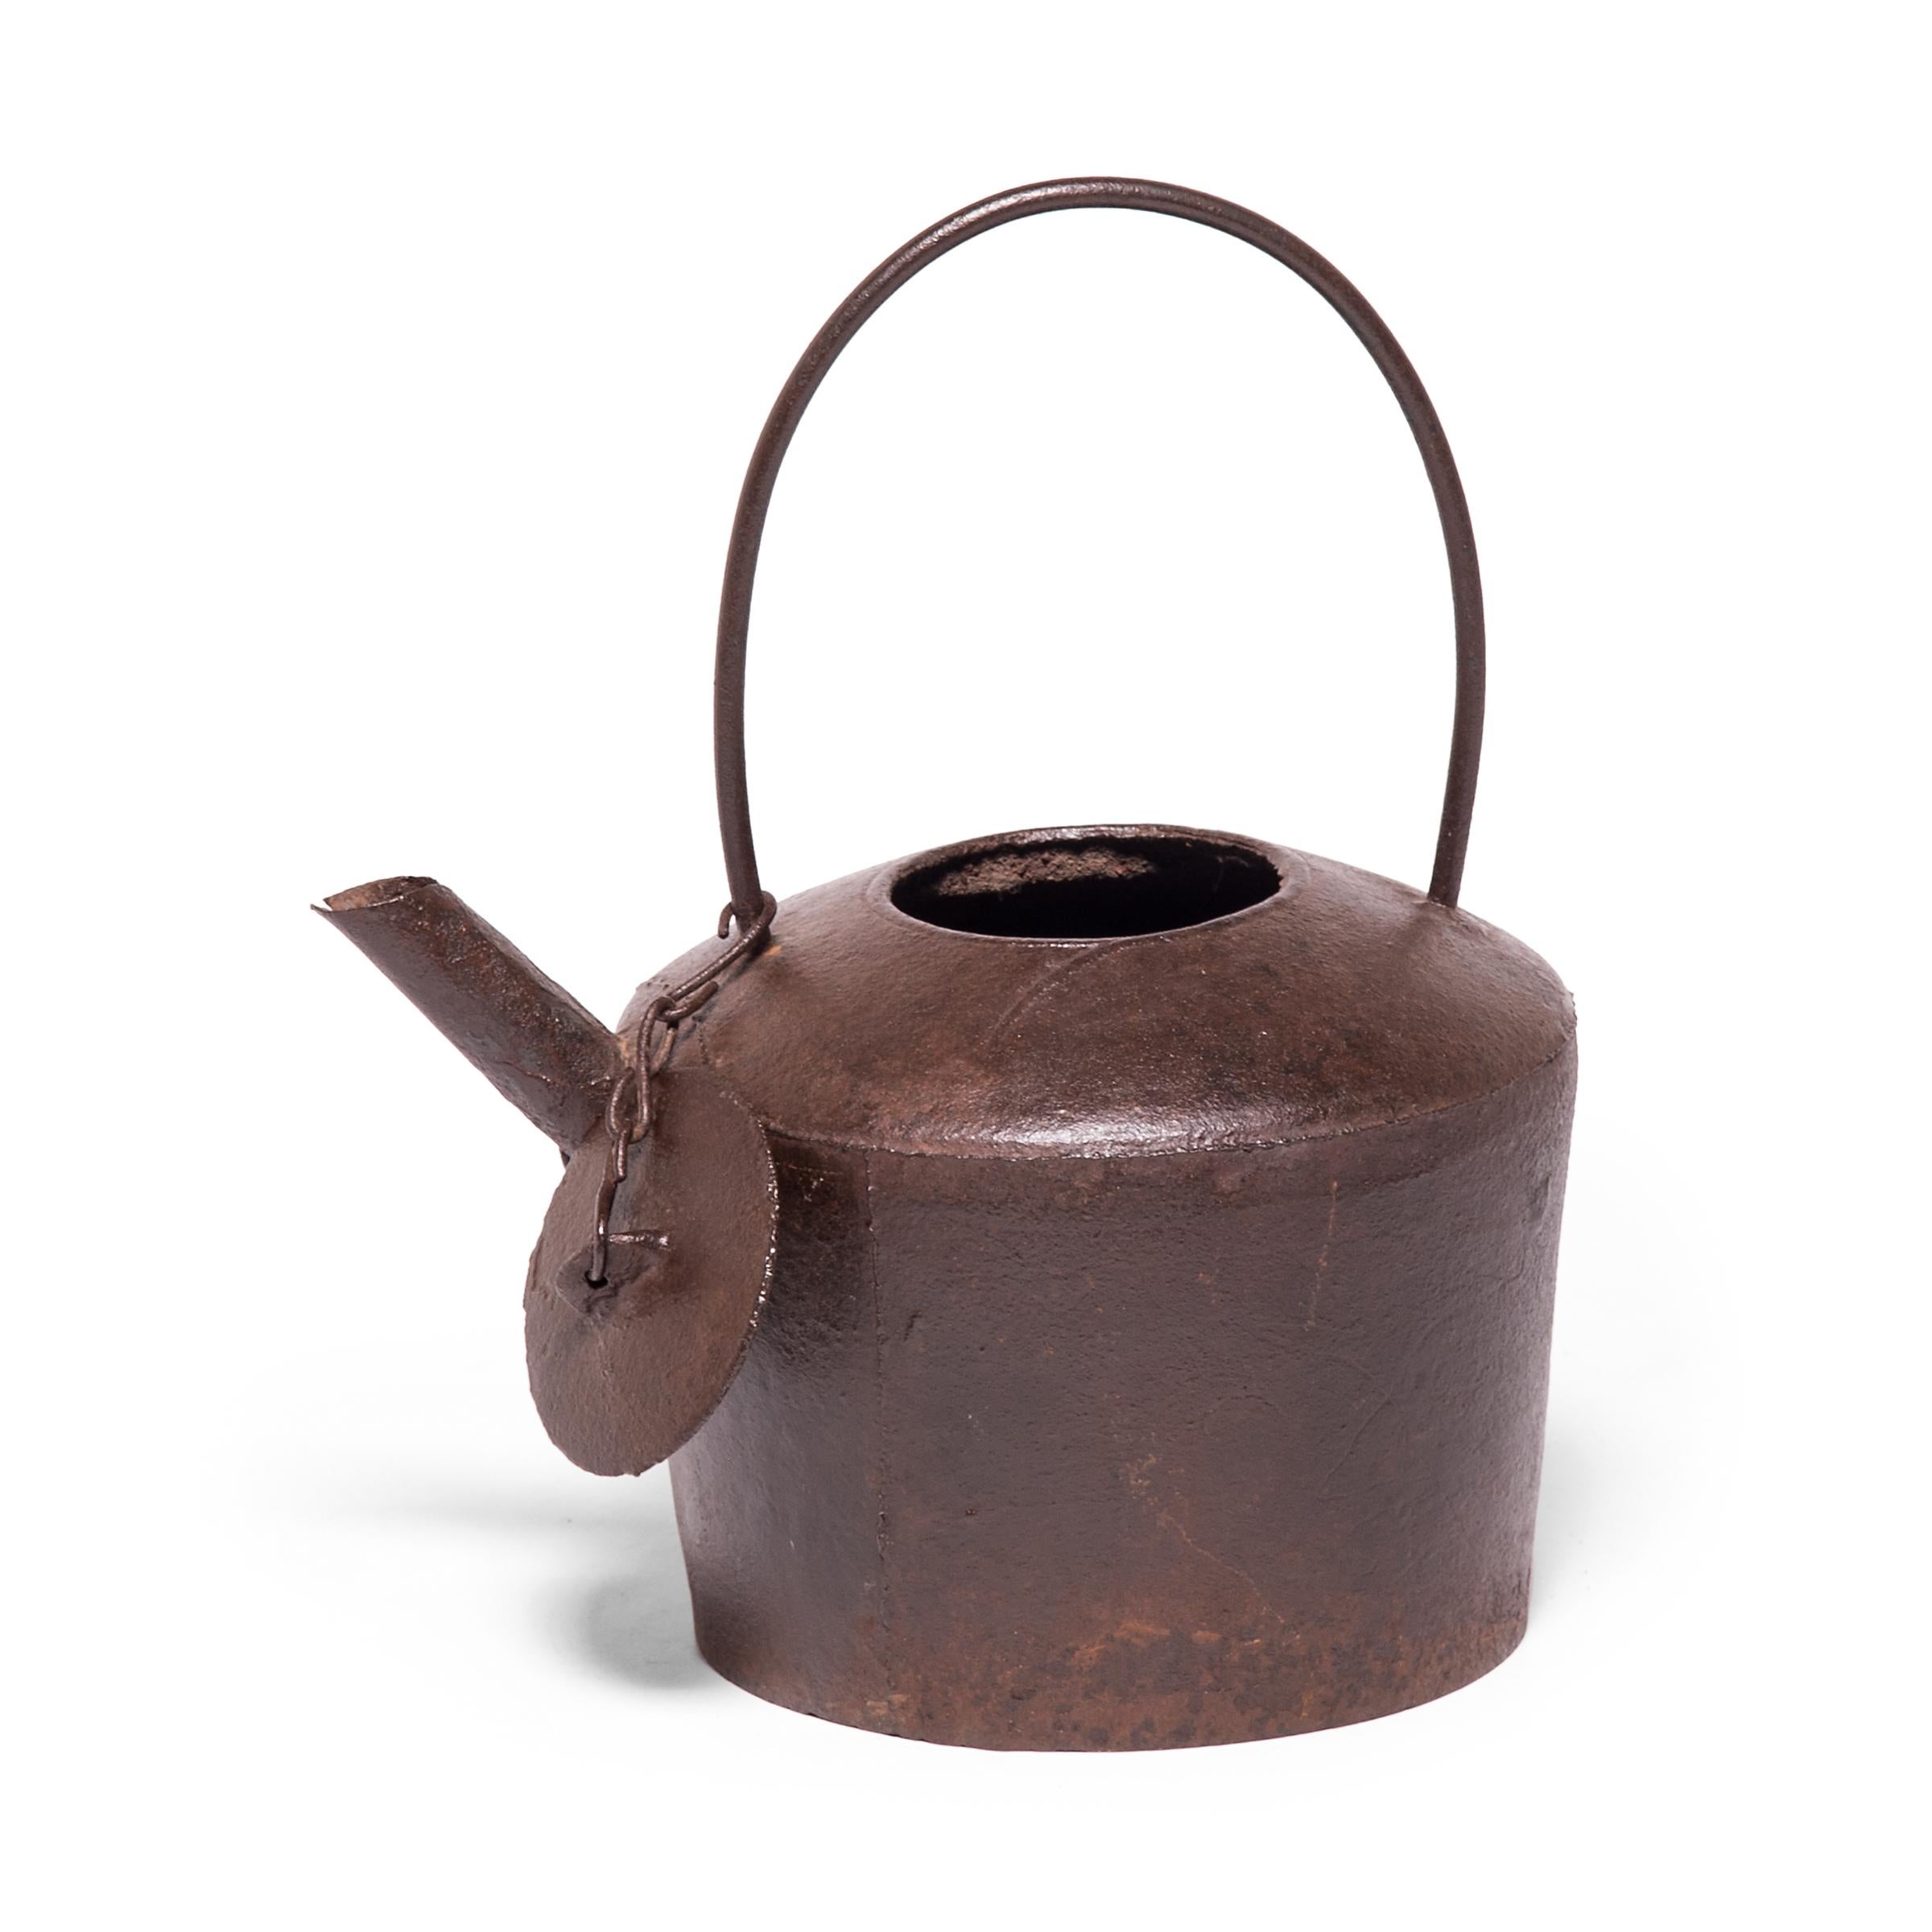 Chinese Cast Iron Tea Pot, c. 1900